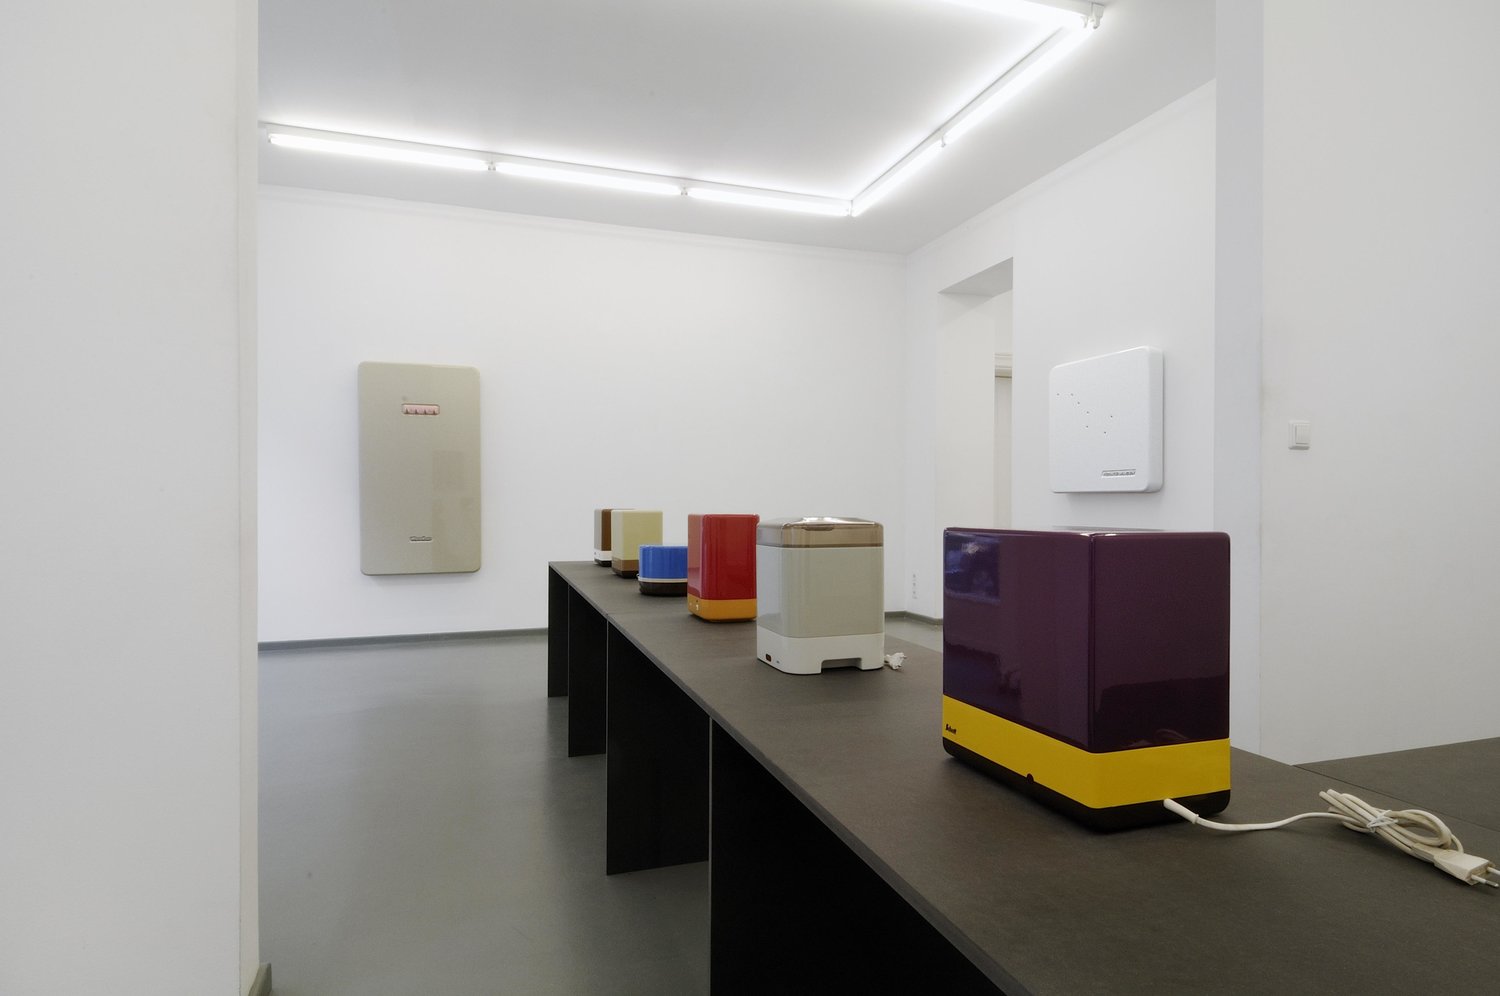  Ausstellungansicht: turbo, 2013, Rasche Ripken, Berlin 